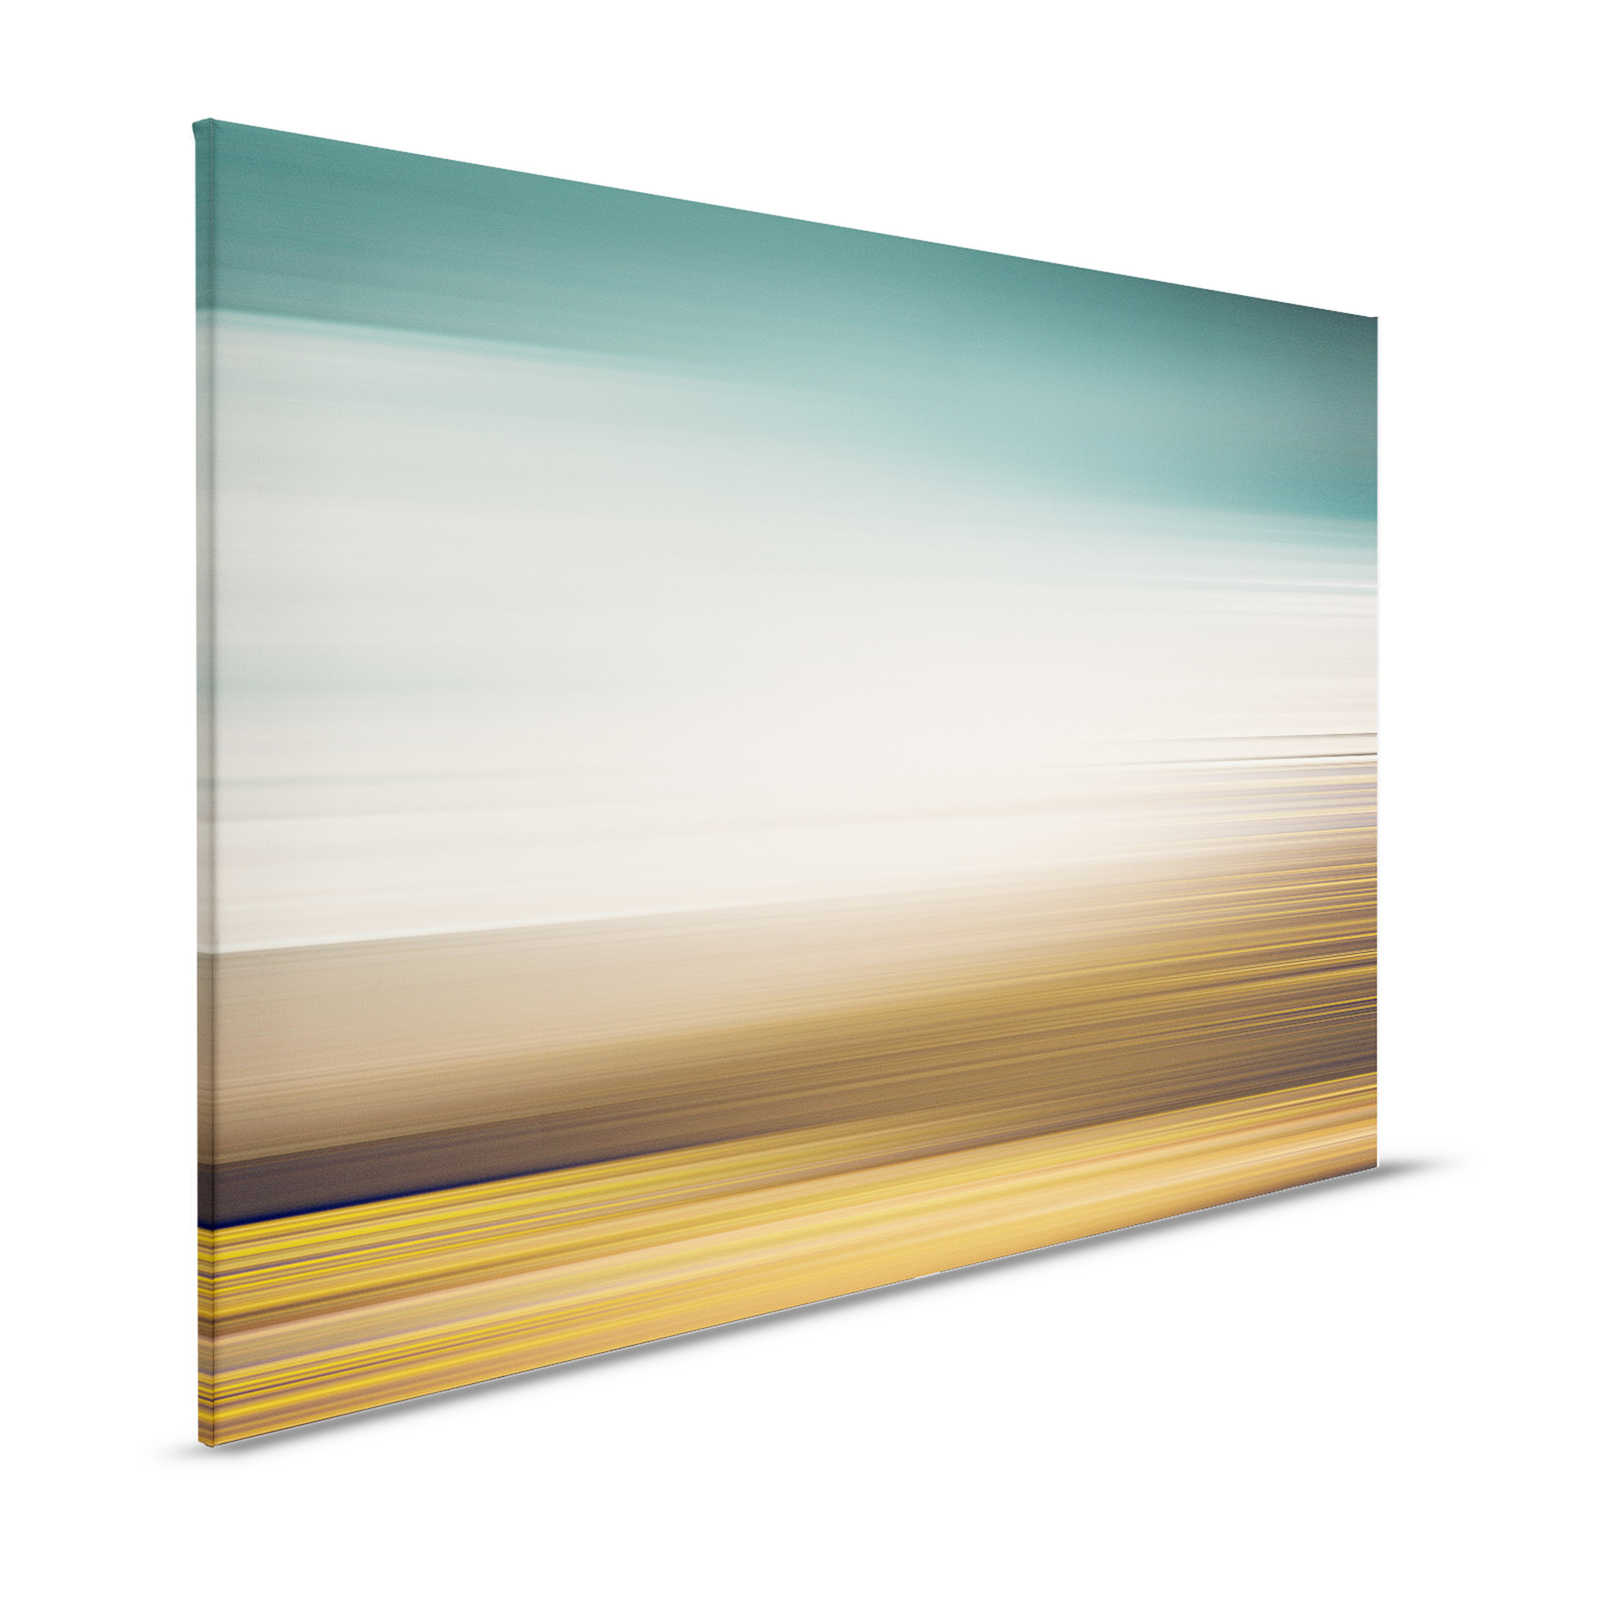 Horizon 3 - Canvas painting Landscape abstract with colour design - 1,20 m x 0,80 m
